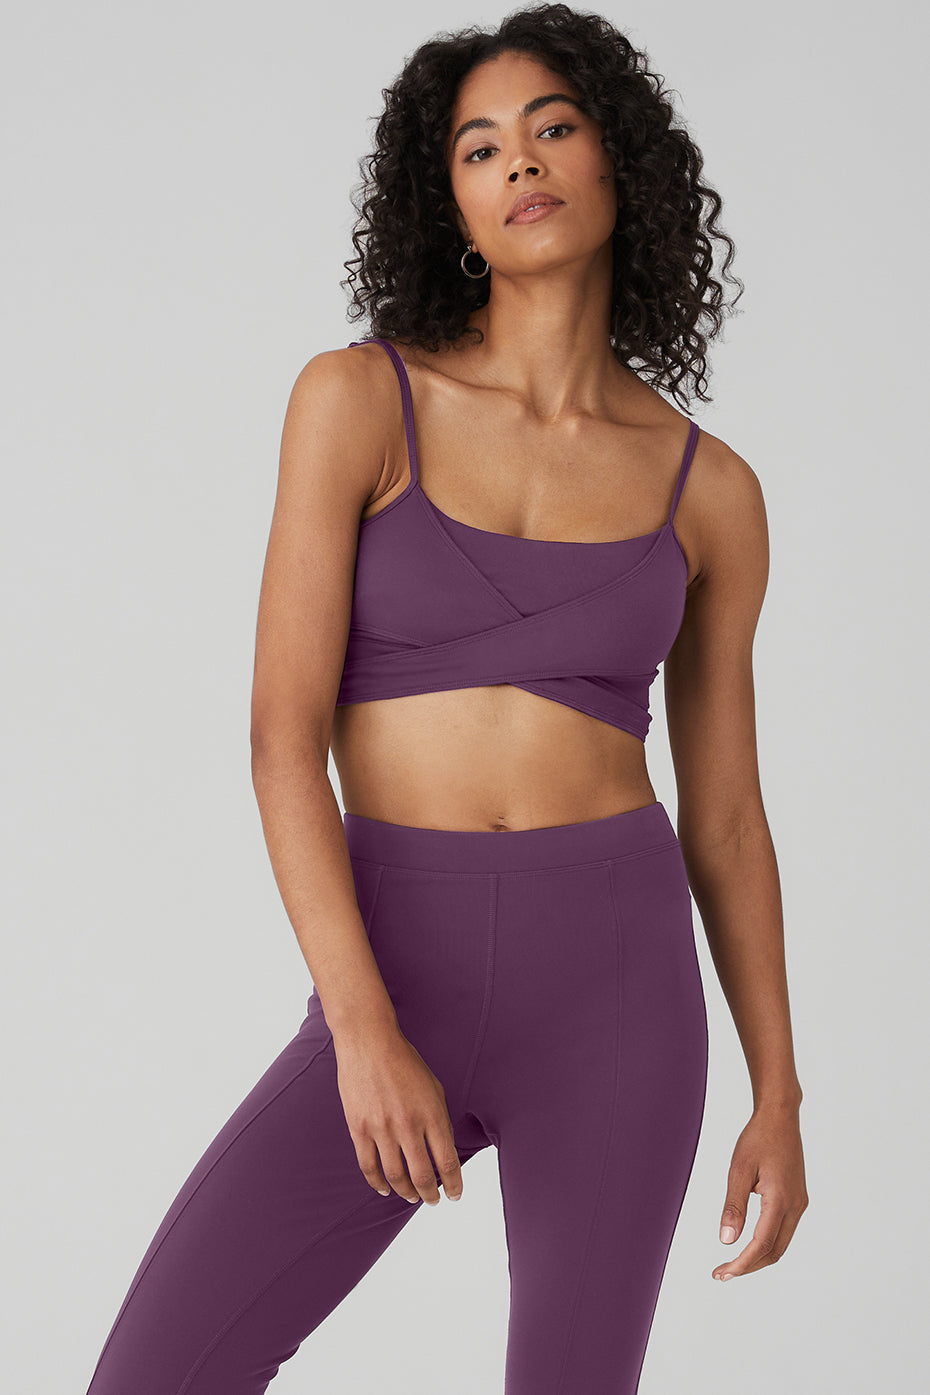 Alo Yoga Purple Smoke Printed Mid Rise Airbrush Leggings, Women's M